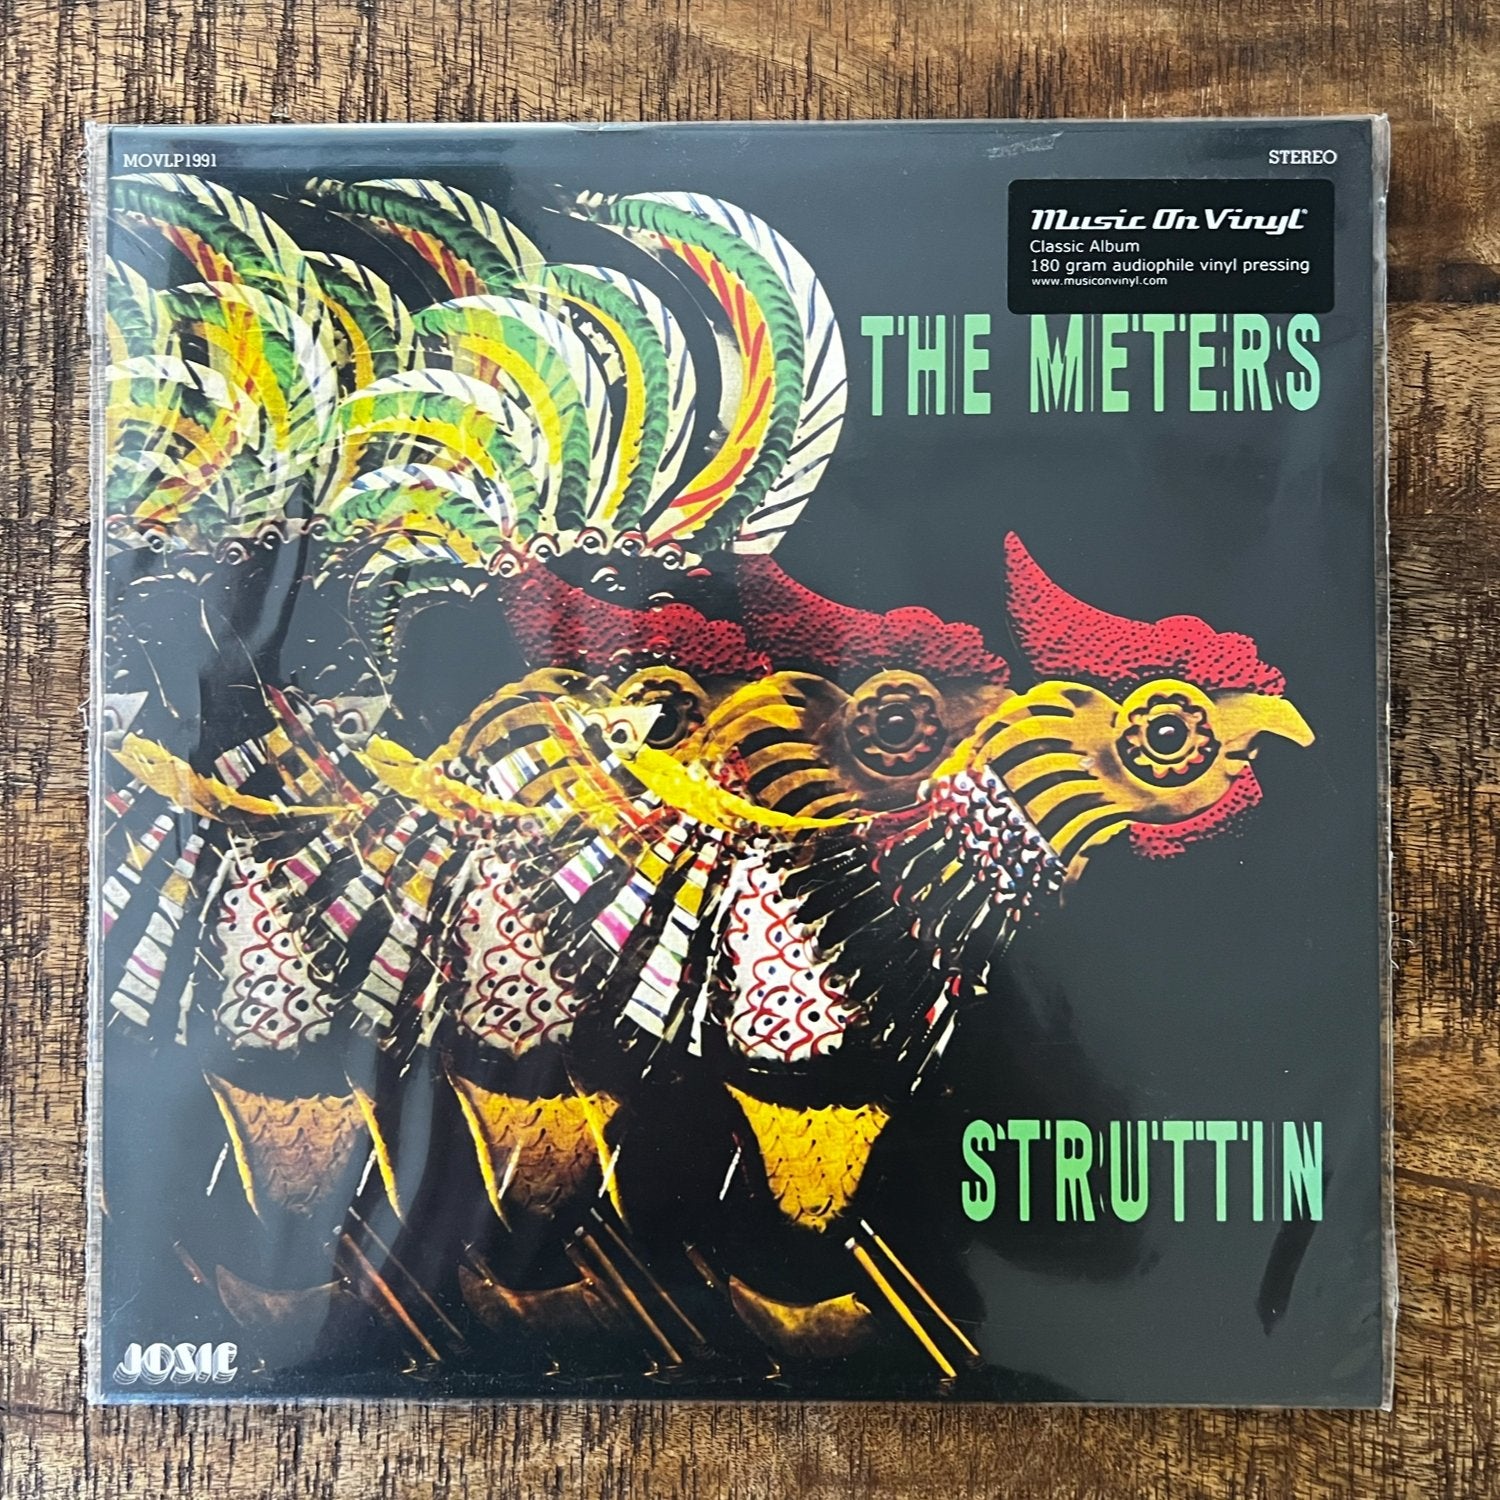 The Meters, Struttin' - Dirty Coast Press